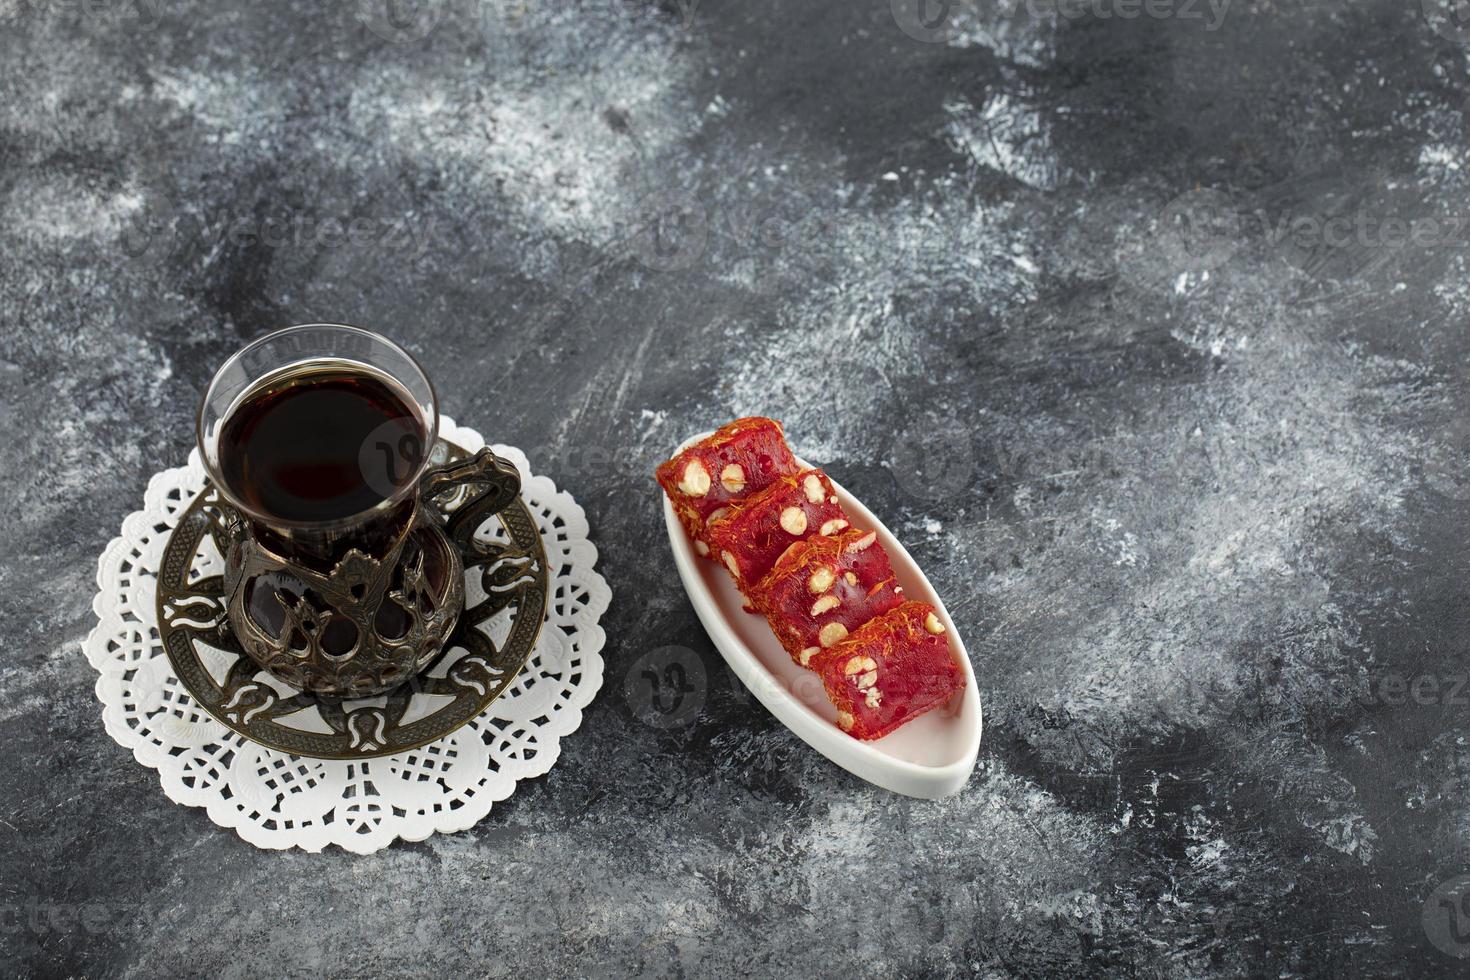 Delicia turca sabrosa con una taza de té caliente foto